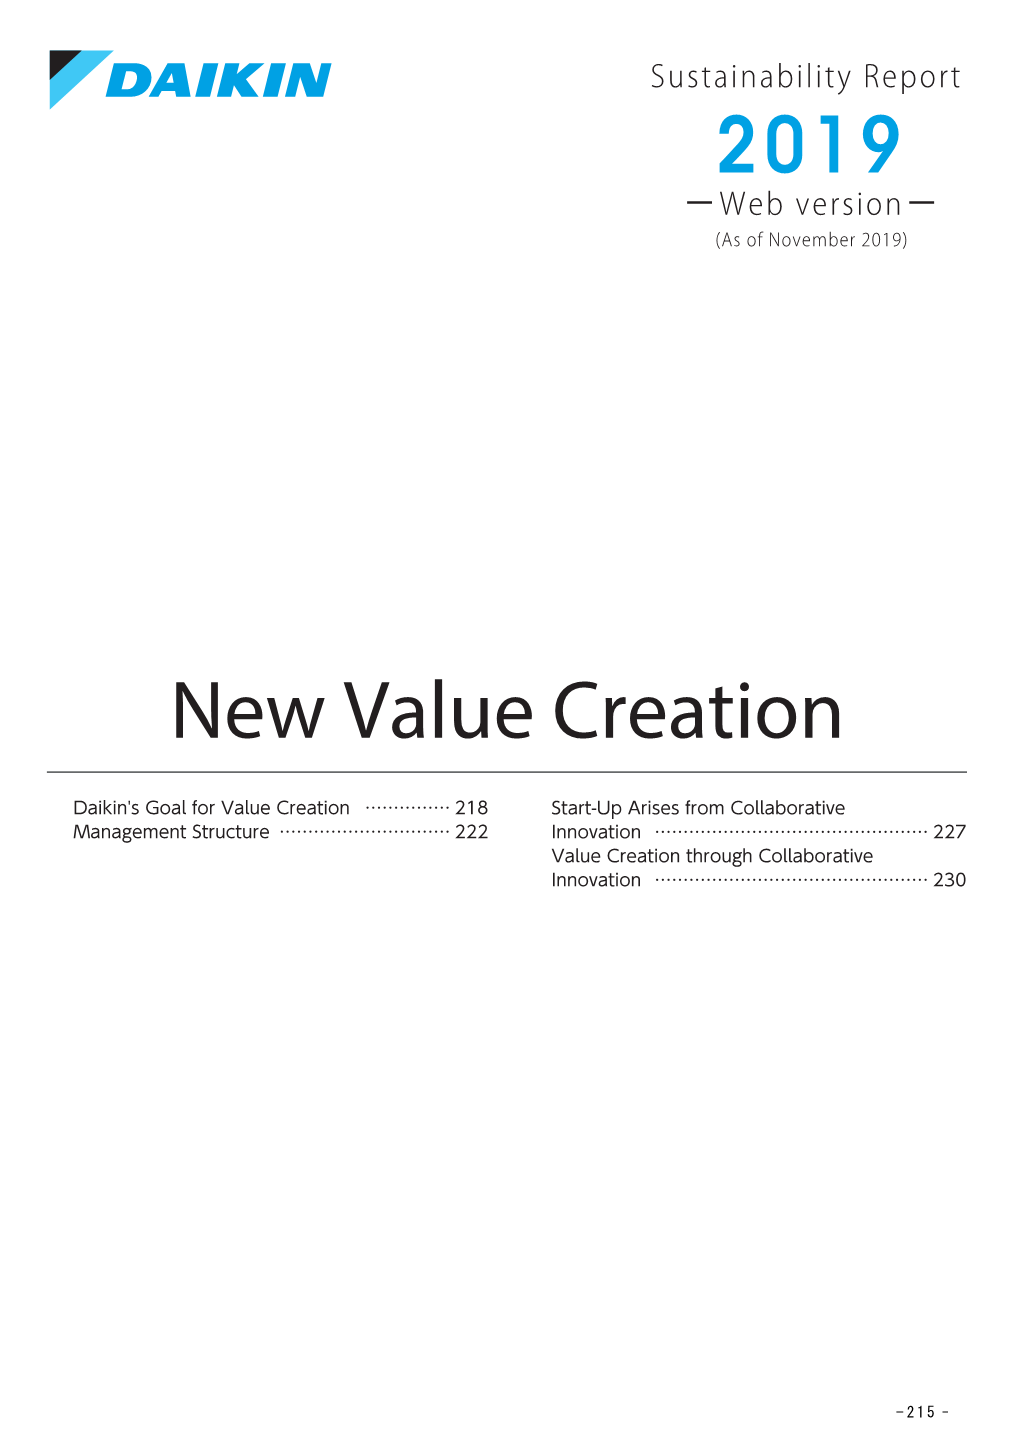 New Value Creation